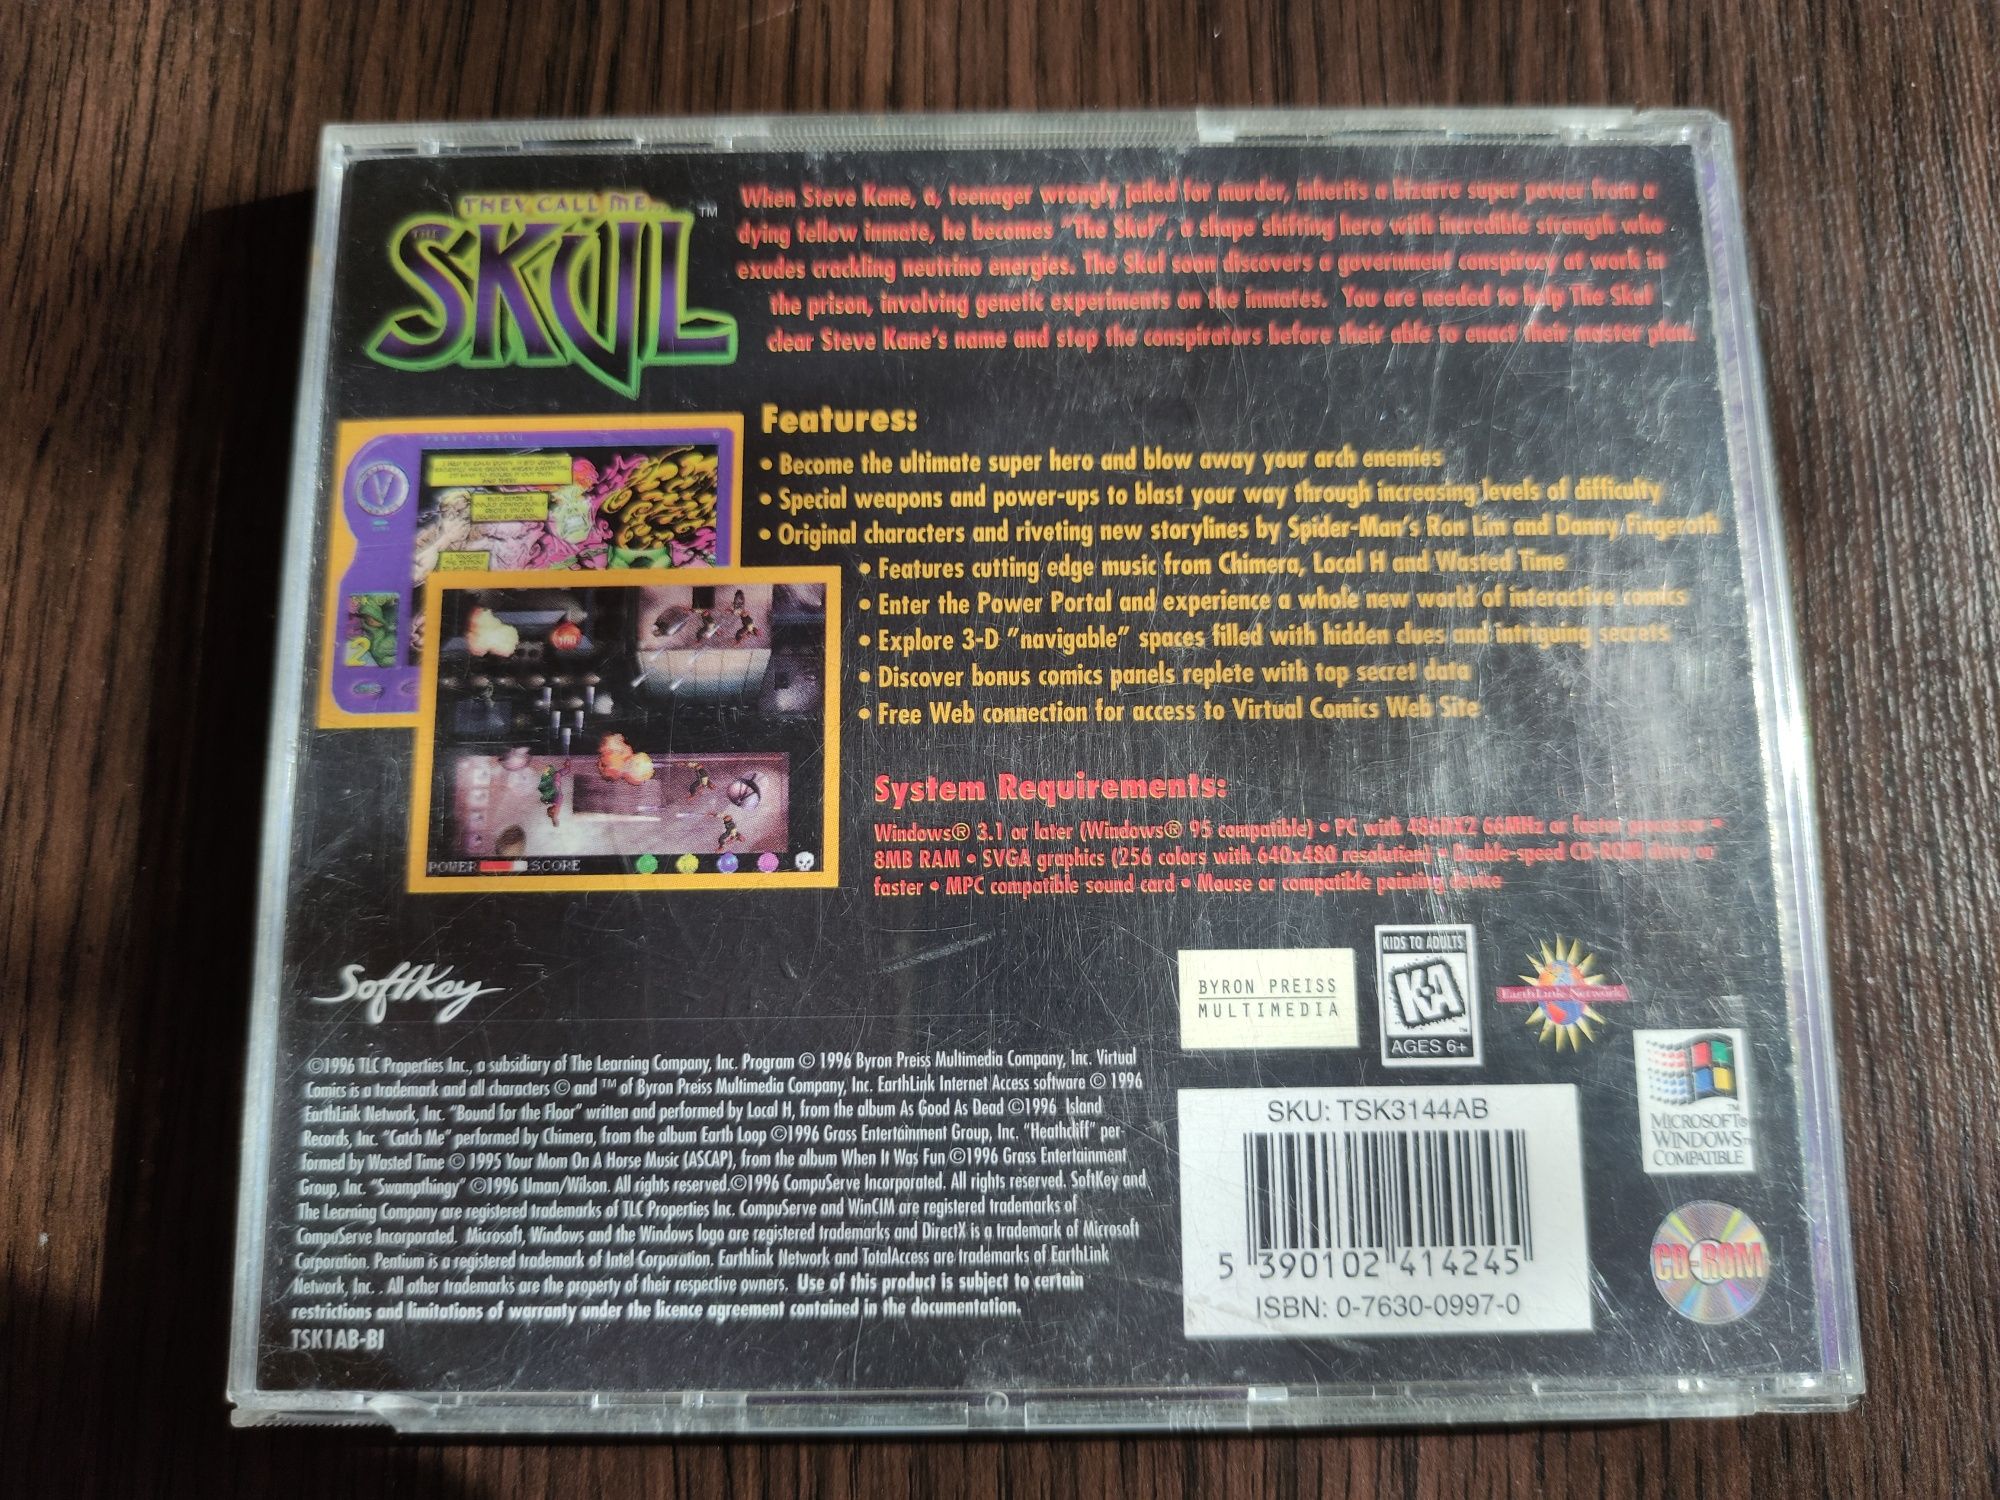 They call me Skul, The softkey 1996